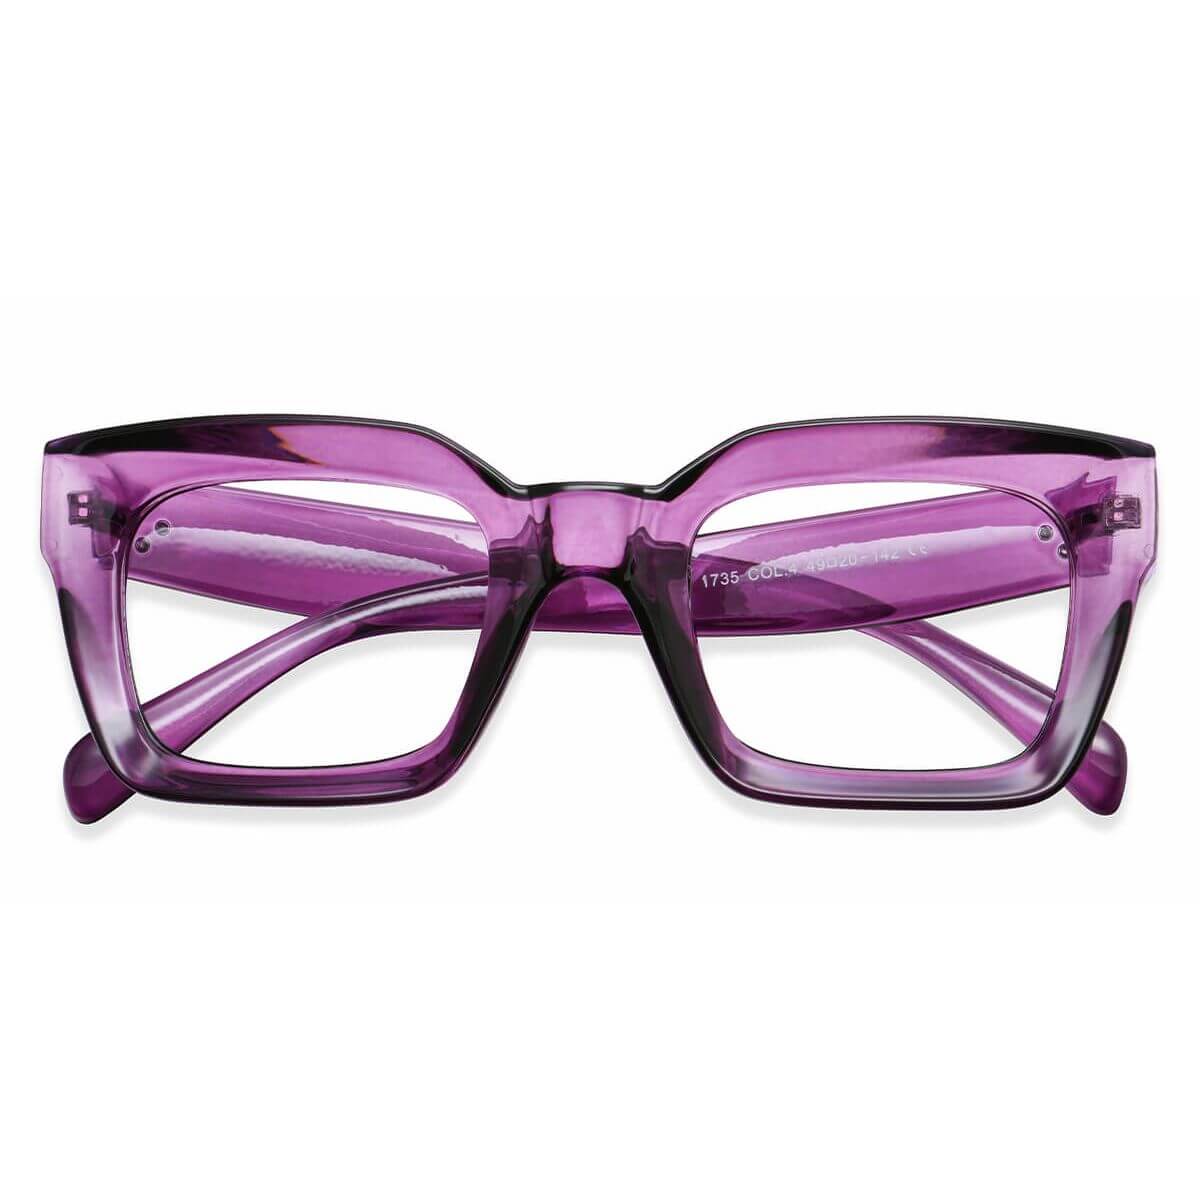 1735 Rectangle Purple Eyeglasses Frames Leoptique